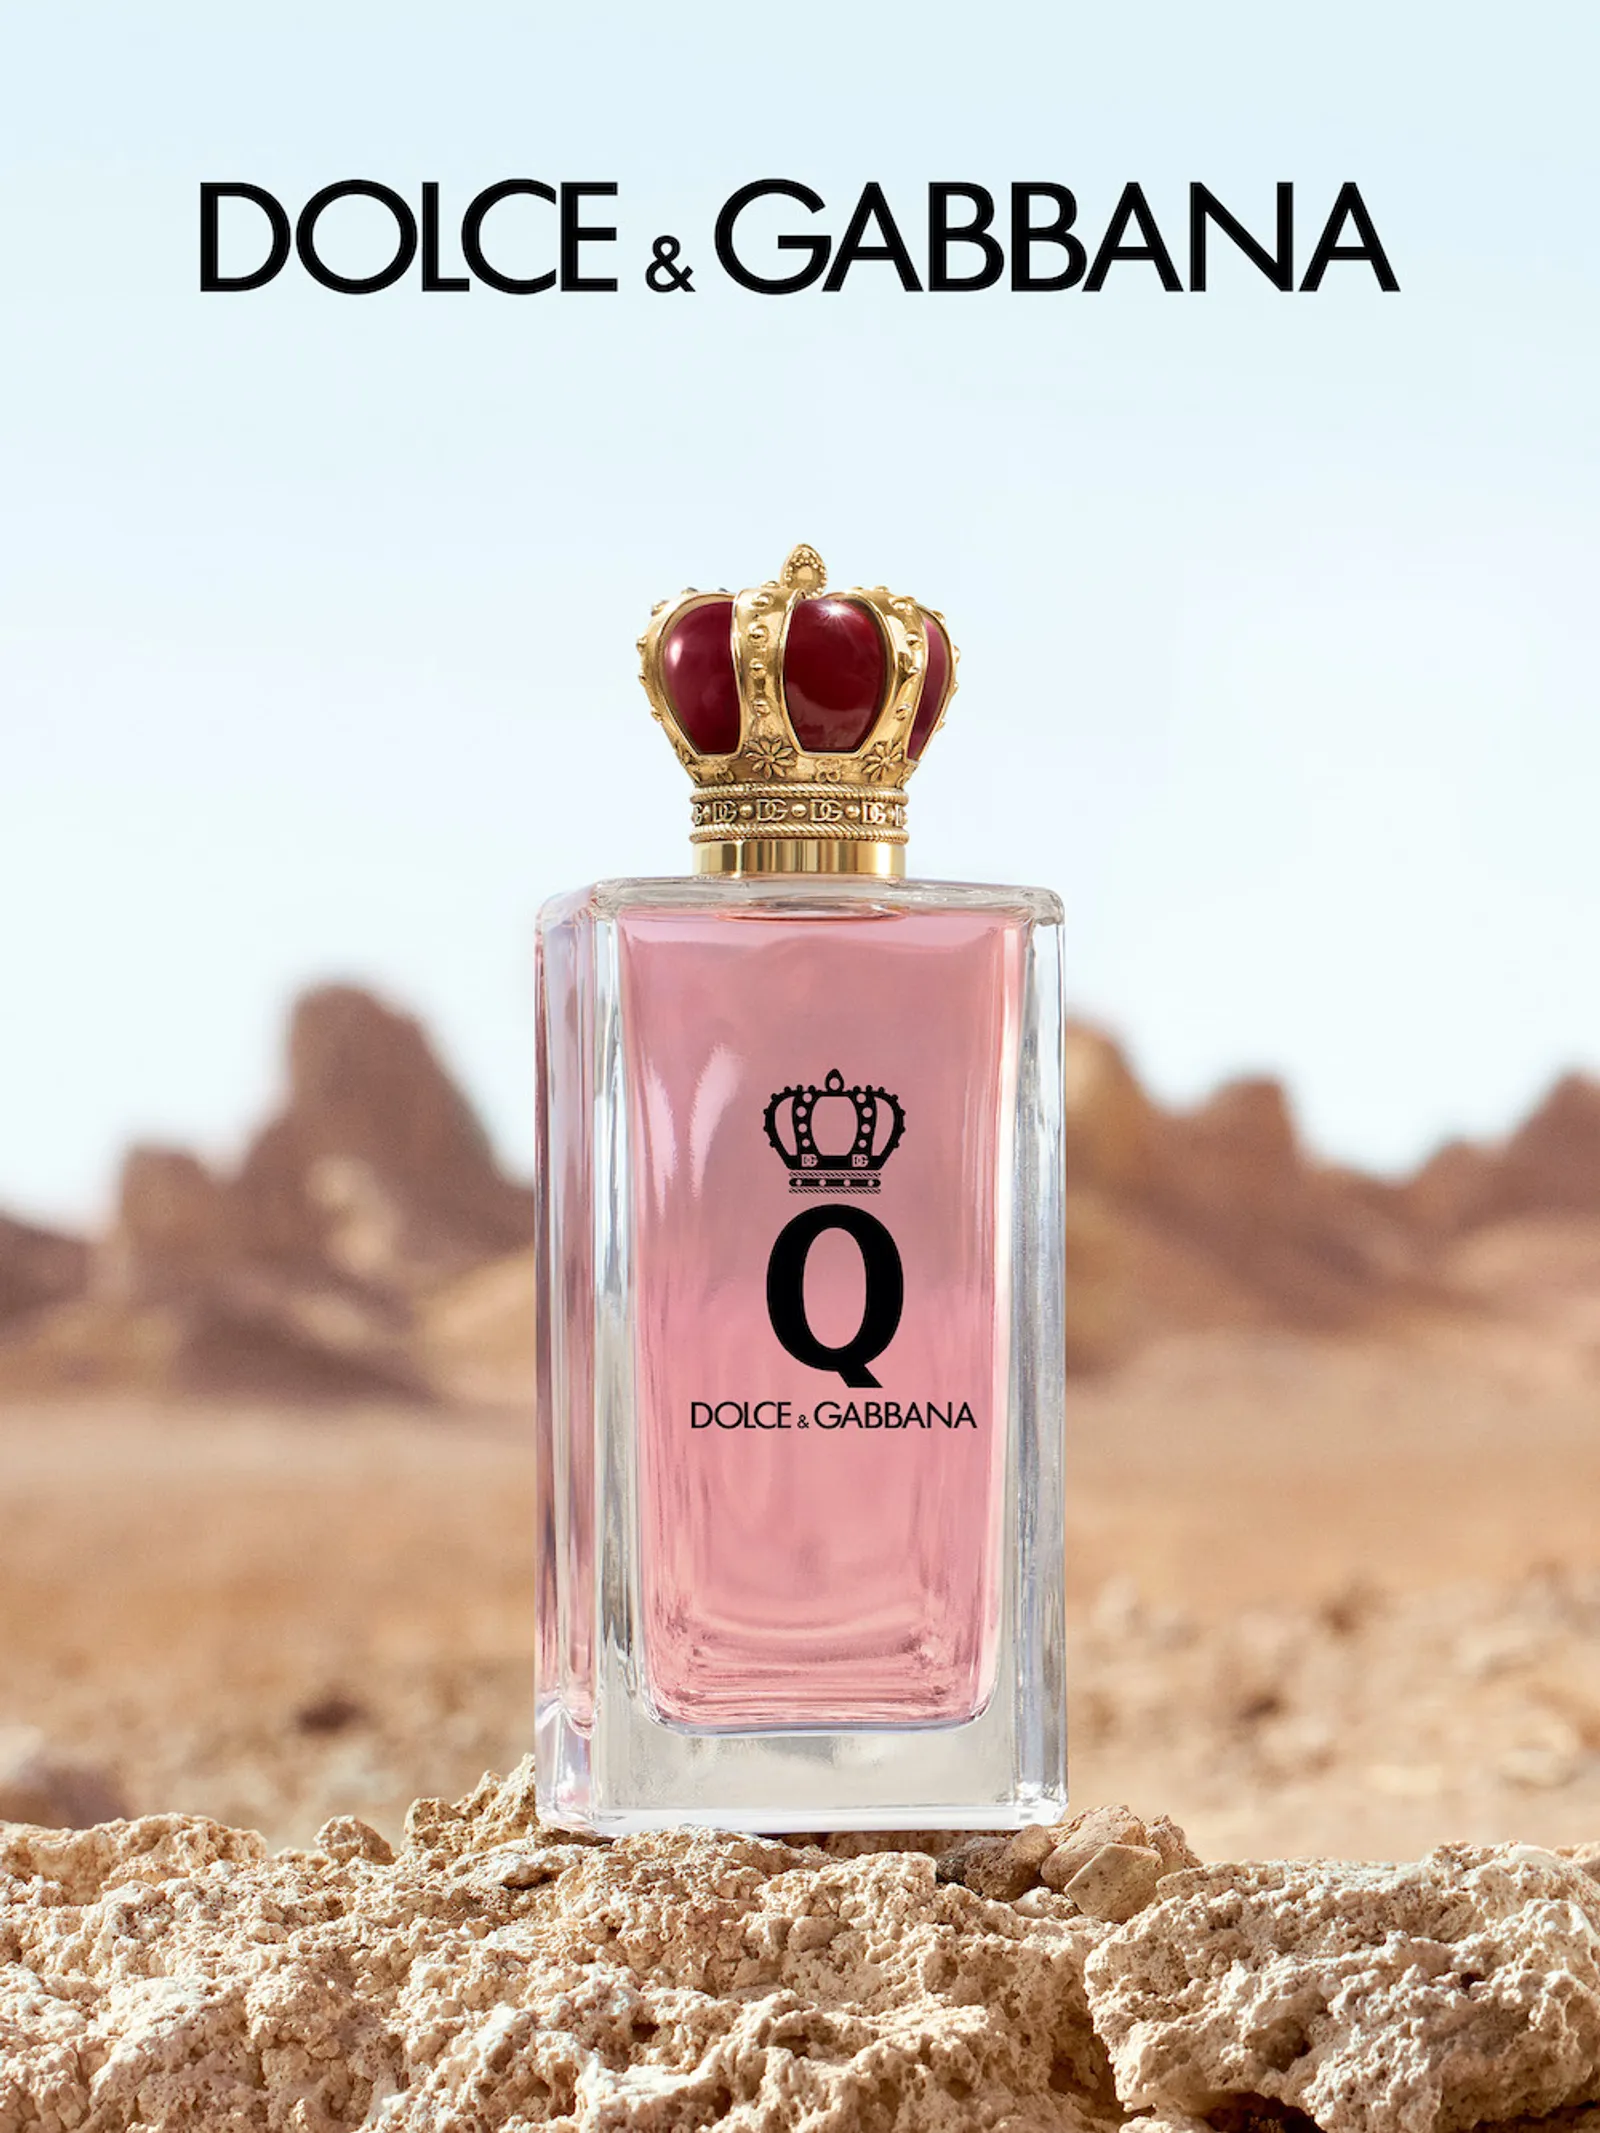 Q by Dolce & Gabbana, Parfum dengan Aroma Cherry yang Memikat